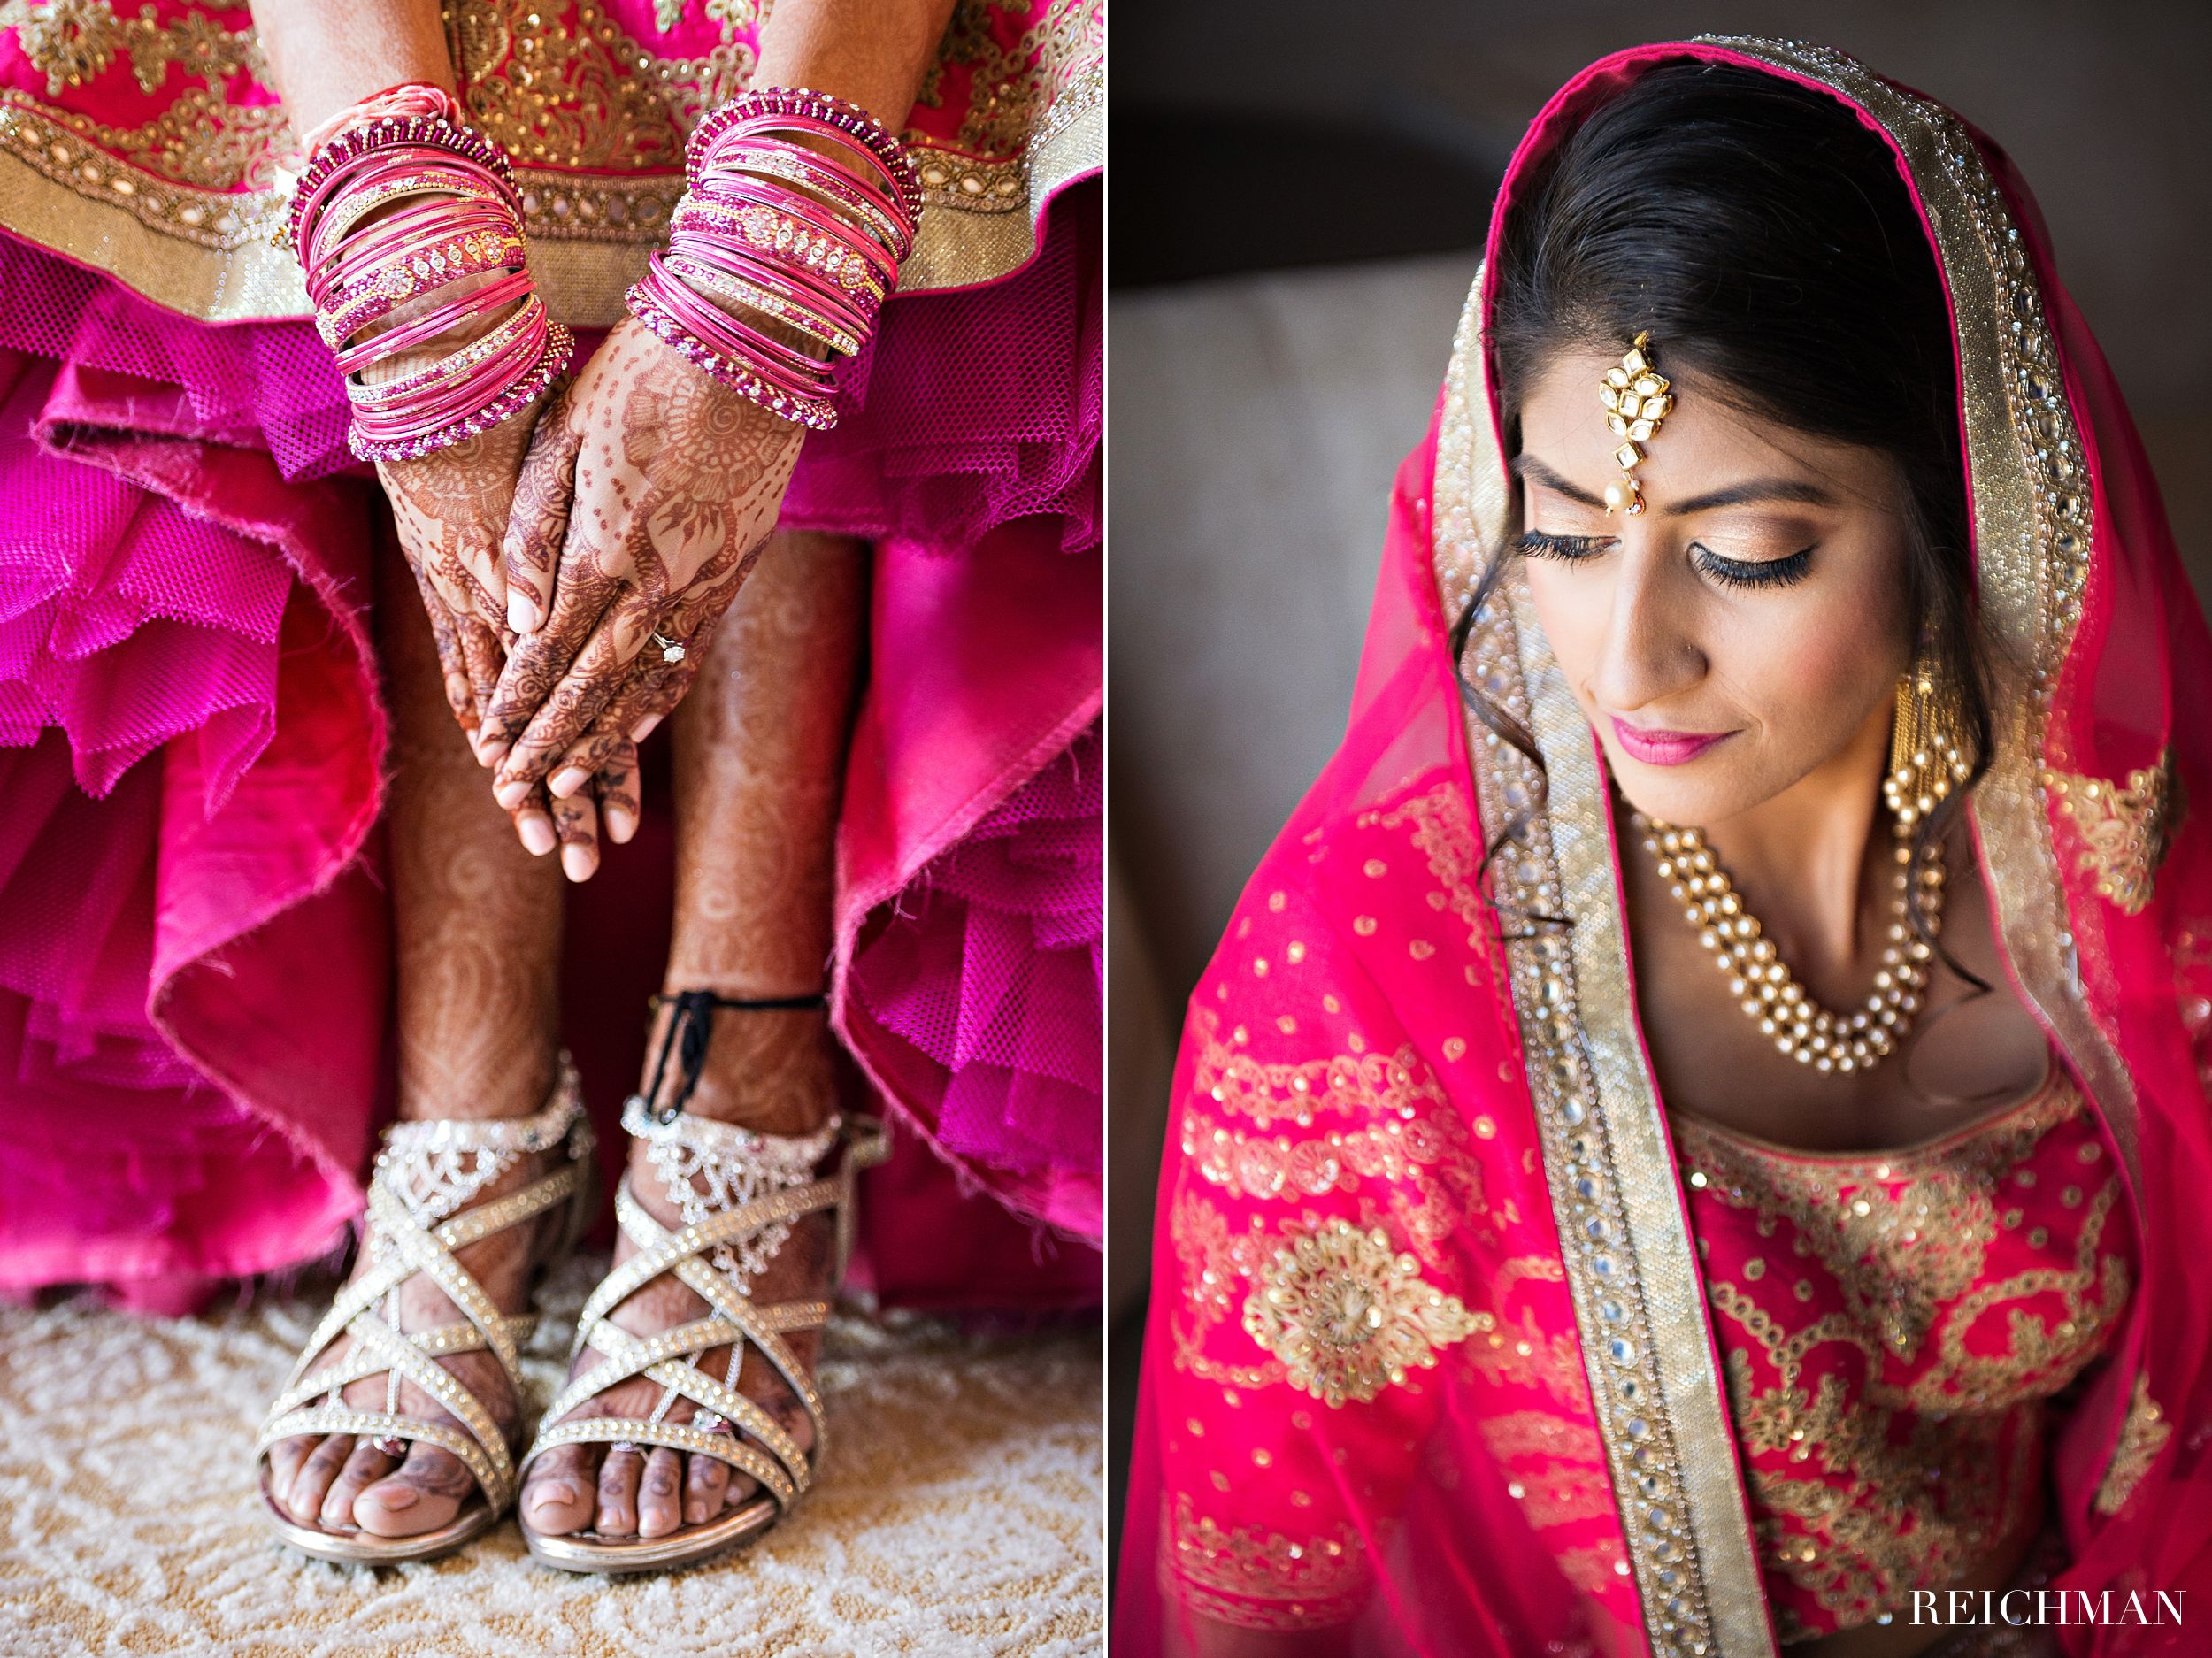 029st-regis-atlanta-hindu-wedding-029